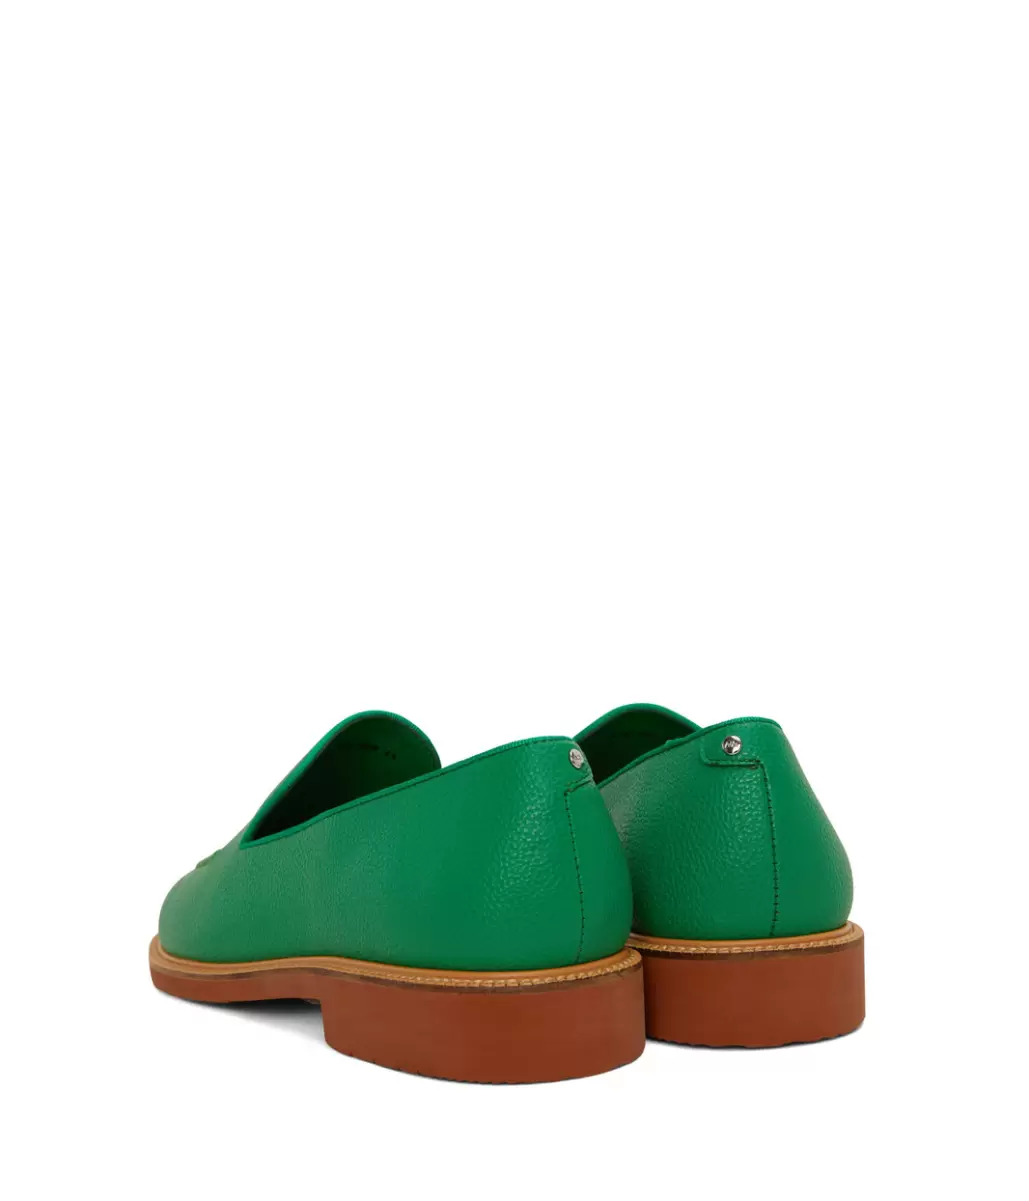 Matt & Nat Limited Time Offer Footwear Altman Men's Vegan Slip On Loafers Men Green - 4